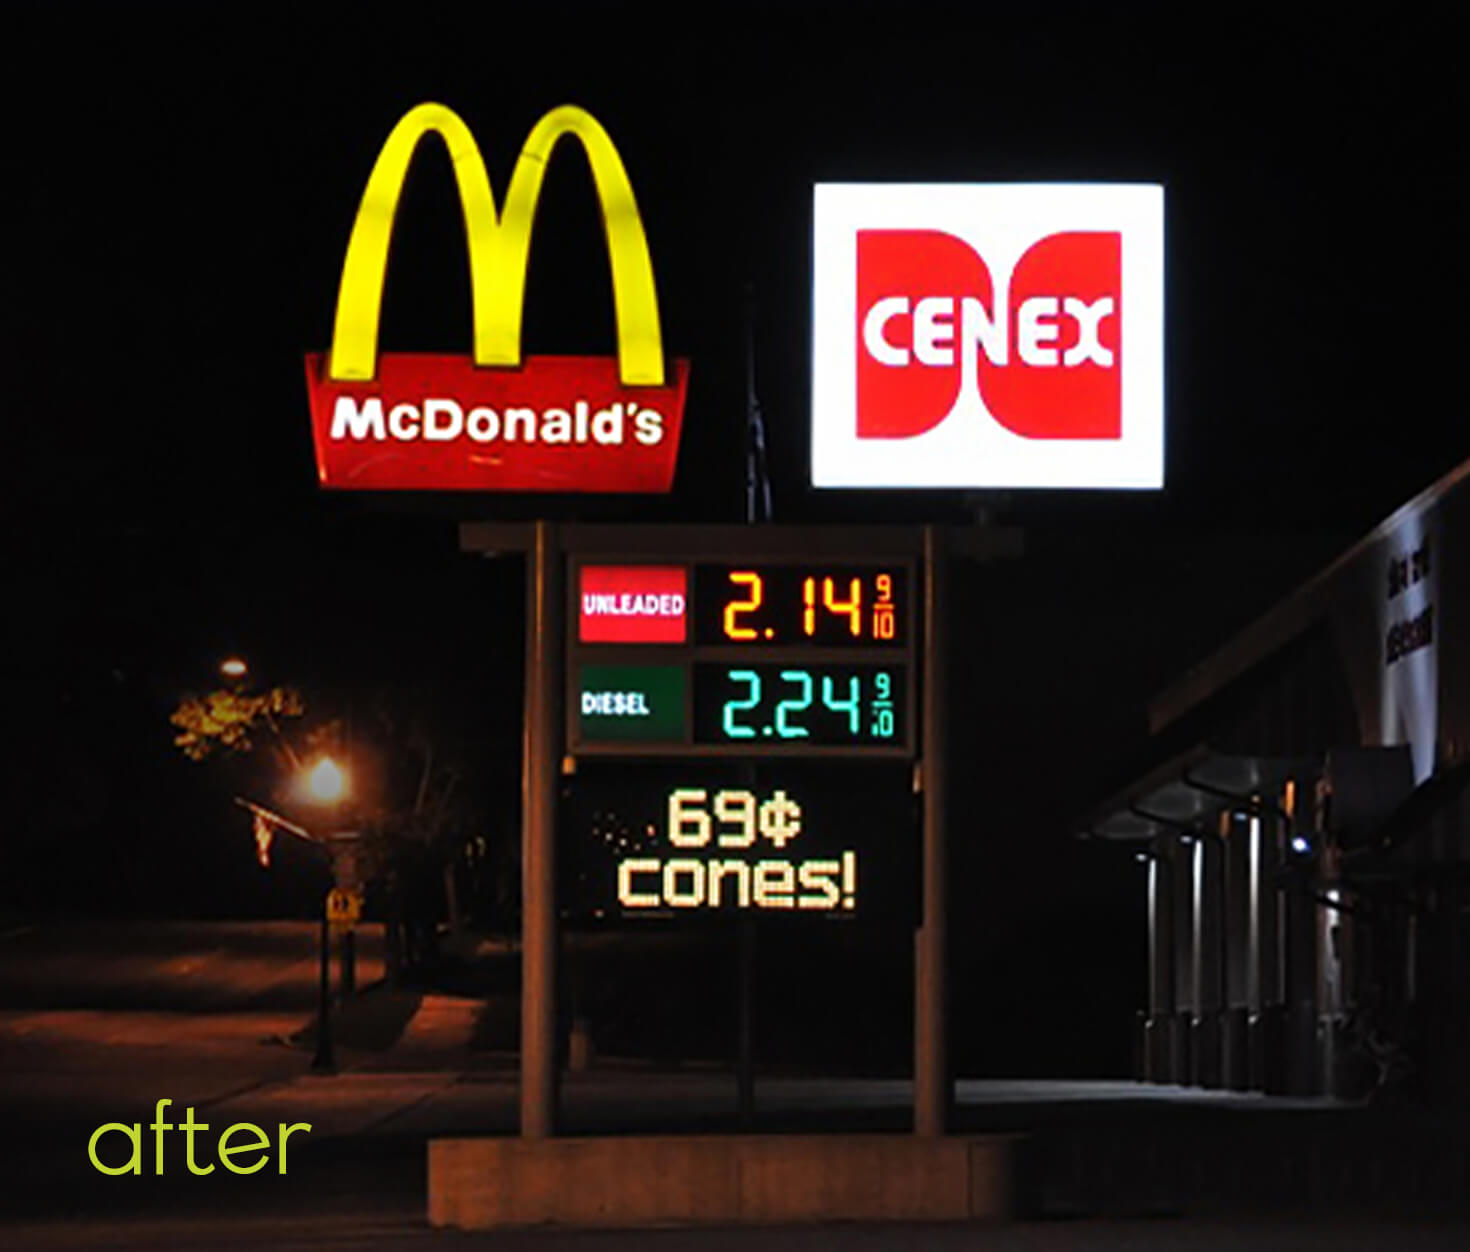 McDonalds and Cenex Exterior sign after lighting conversion